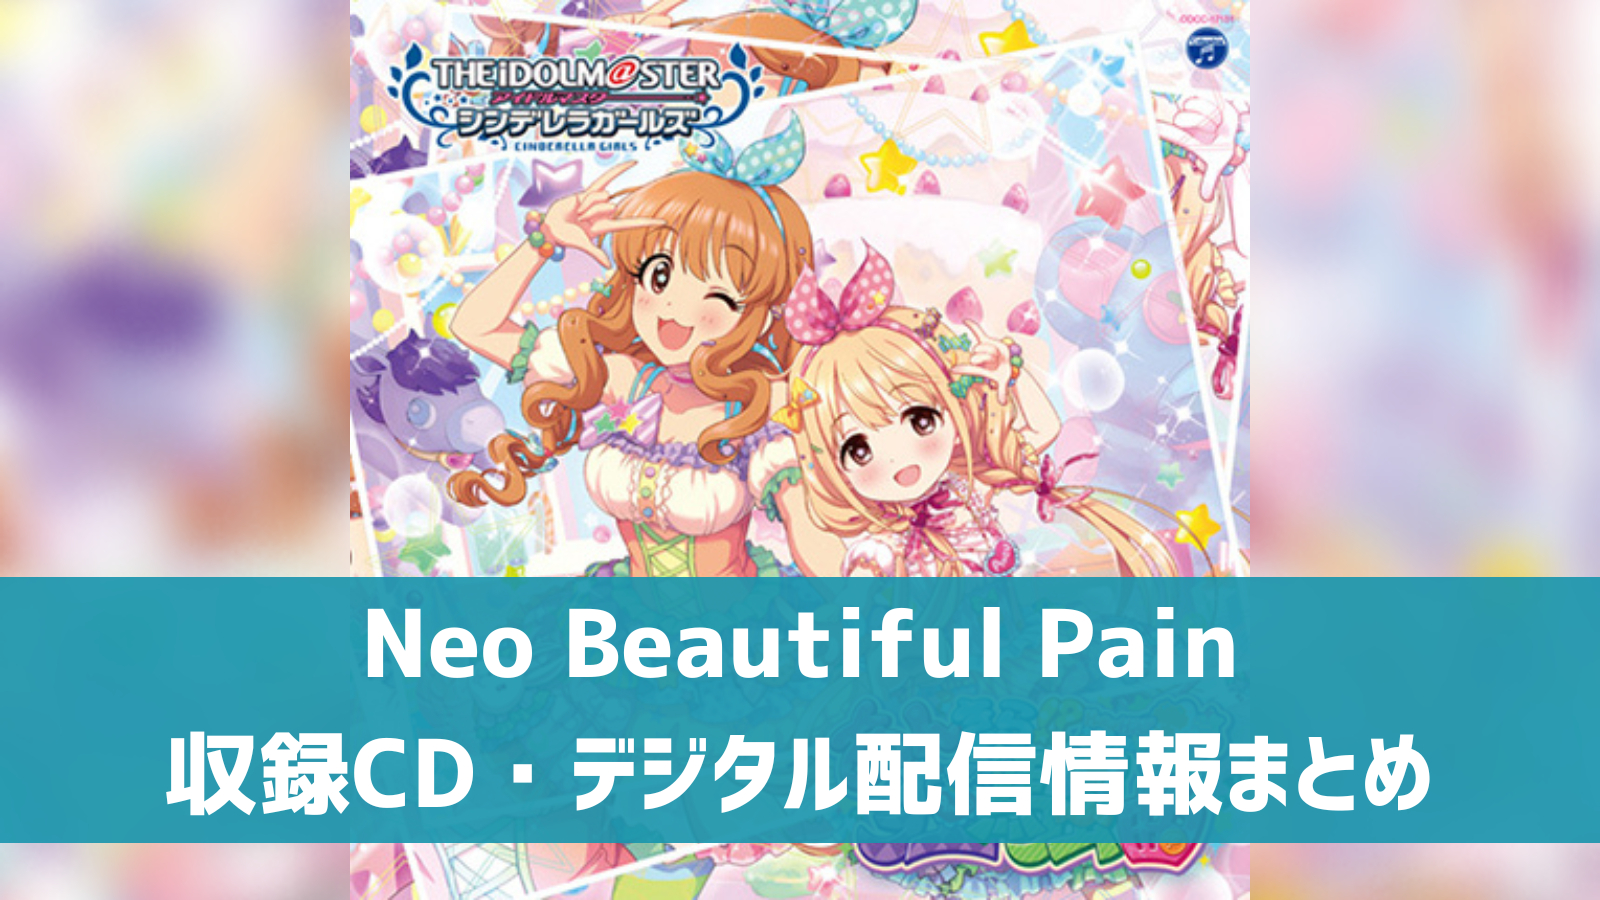 Neo Beautiful Pain